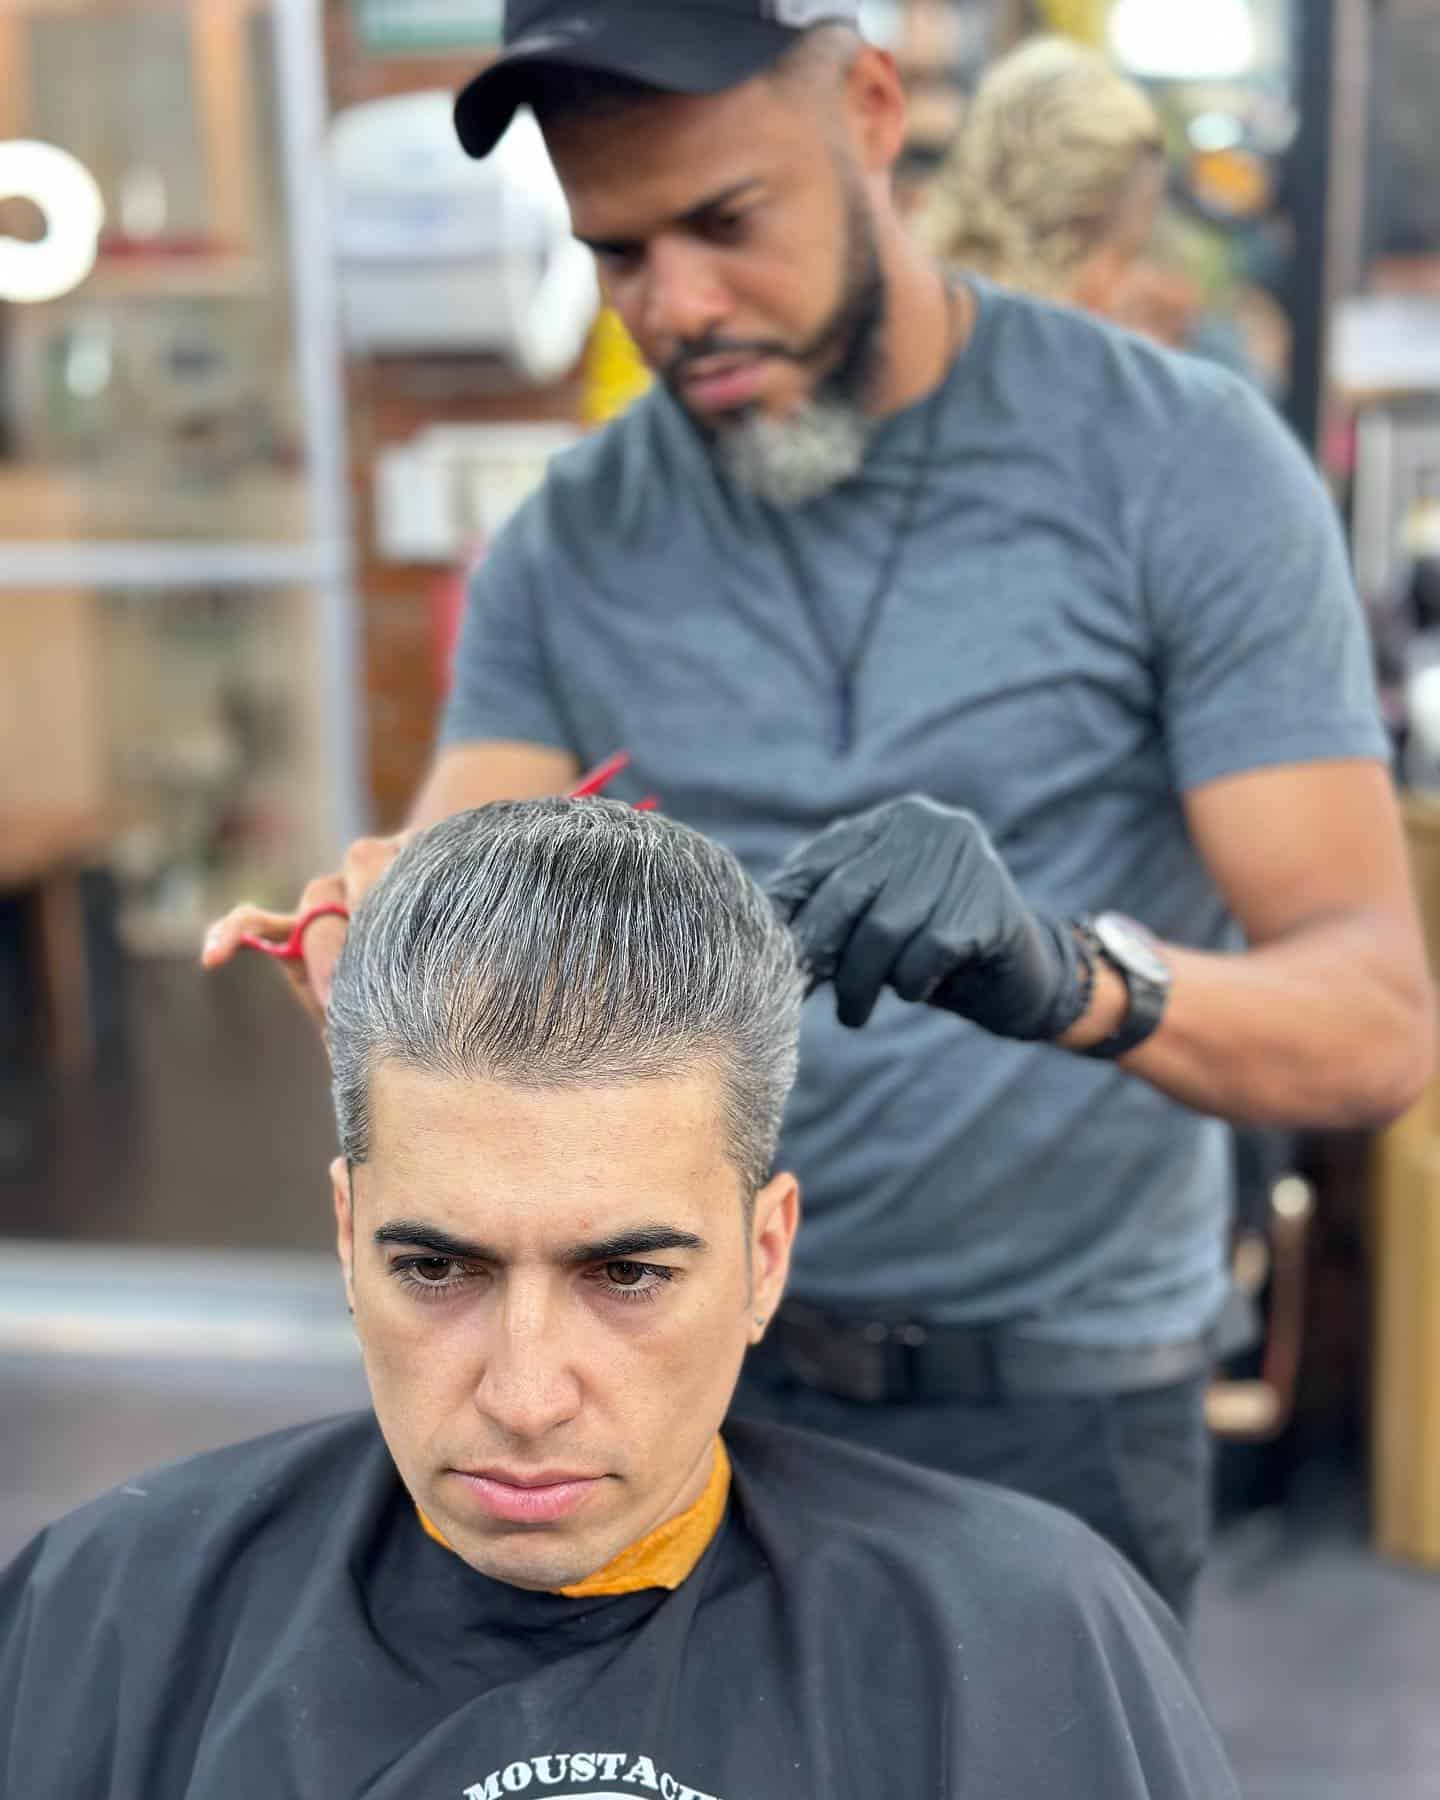 barber trimming a mans hair